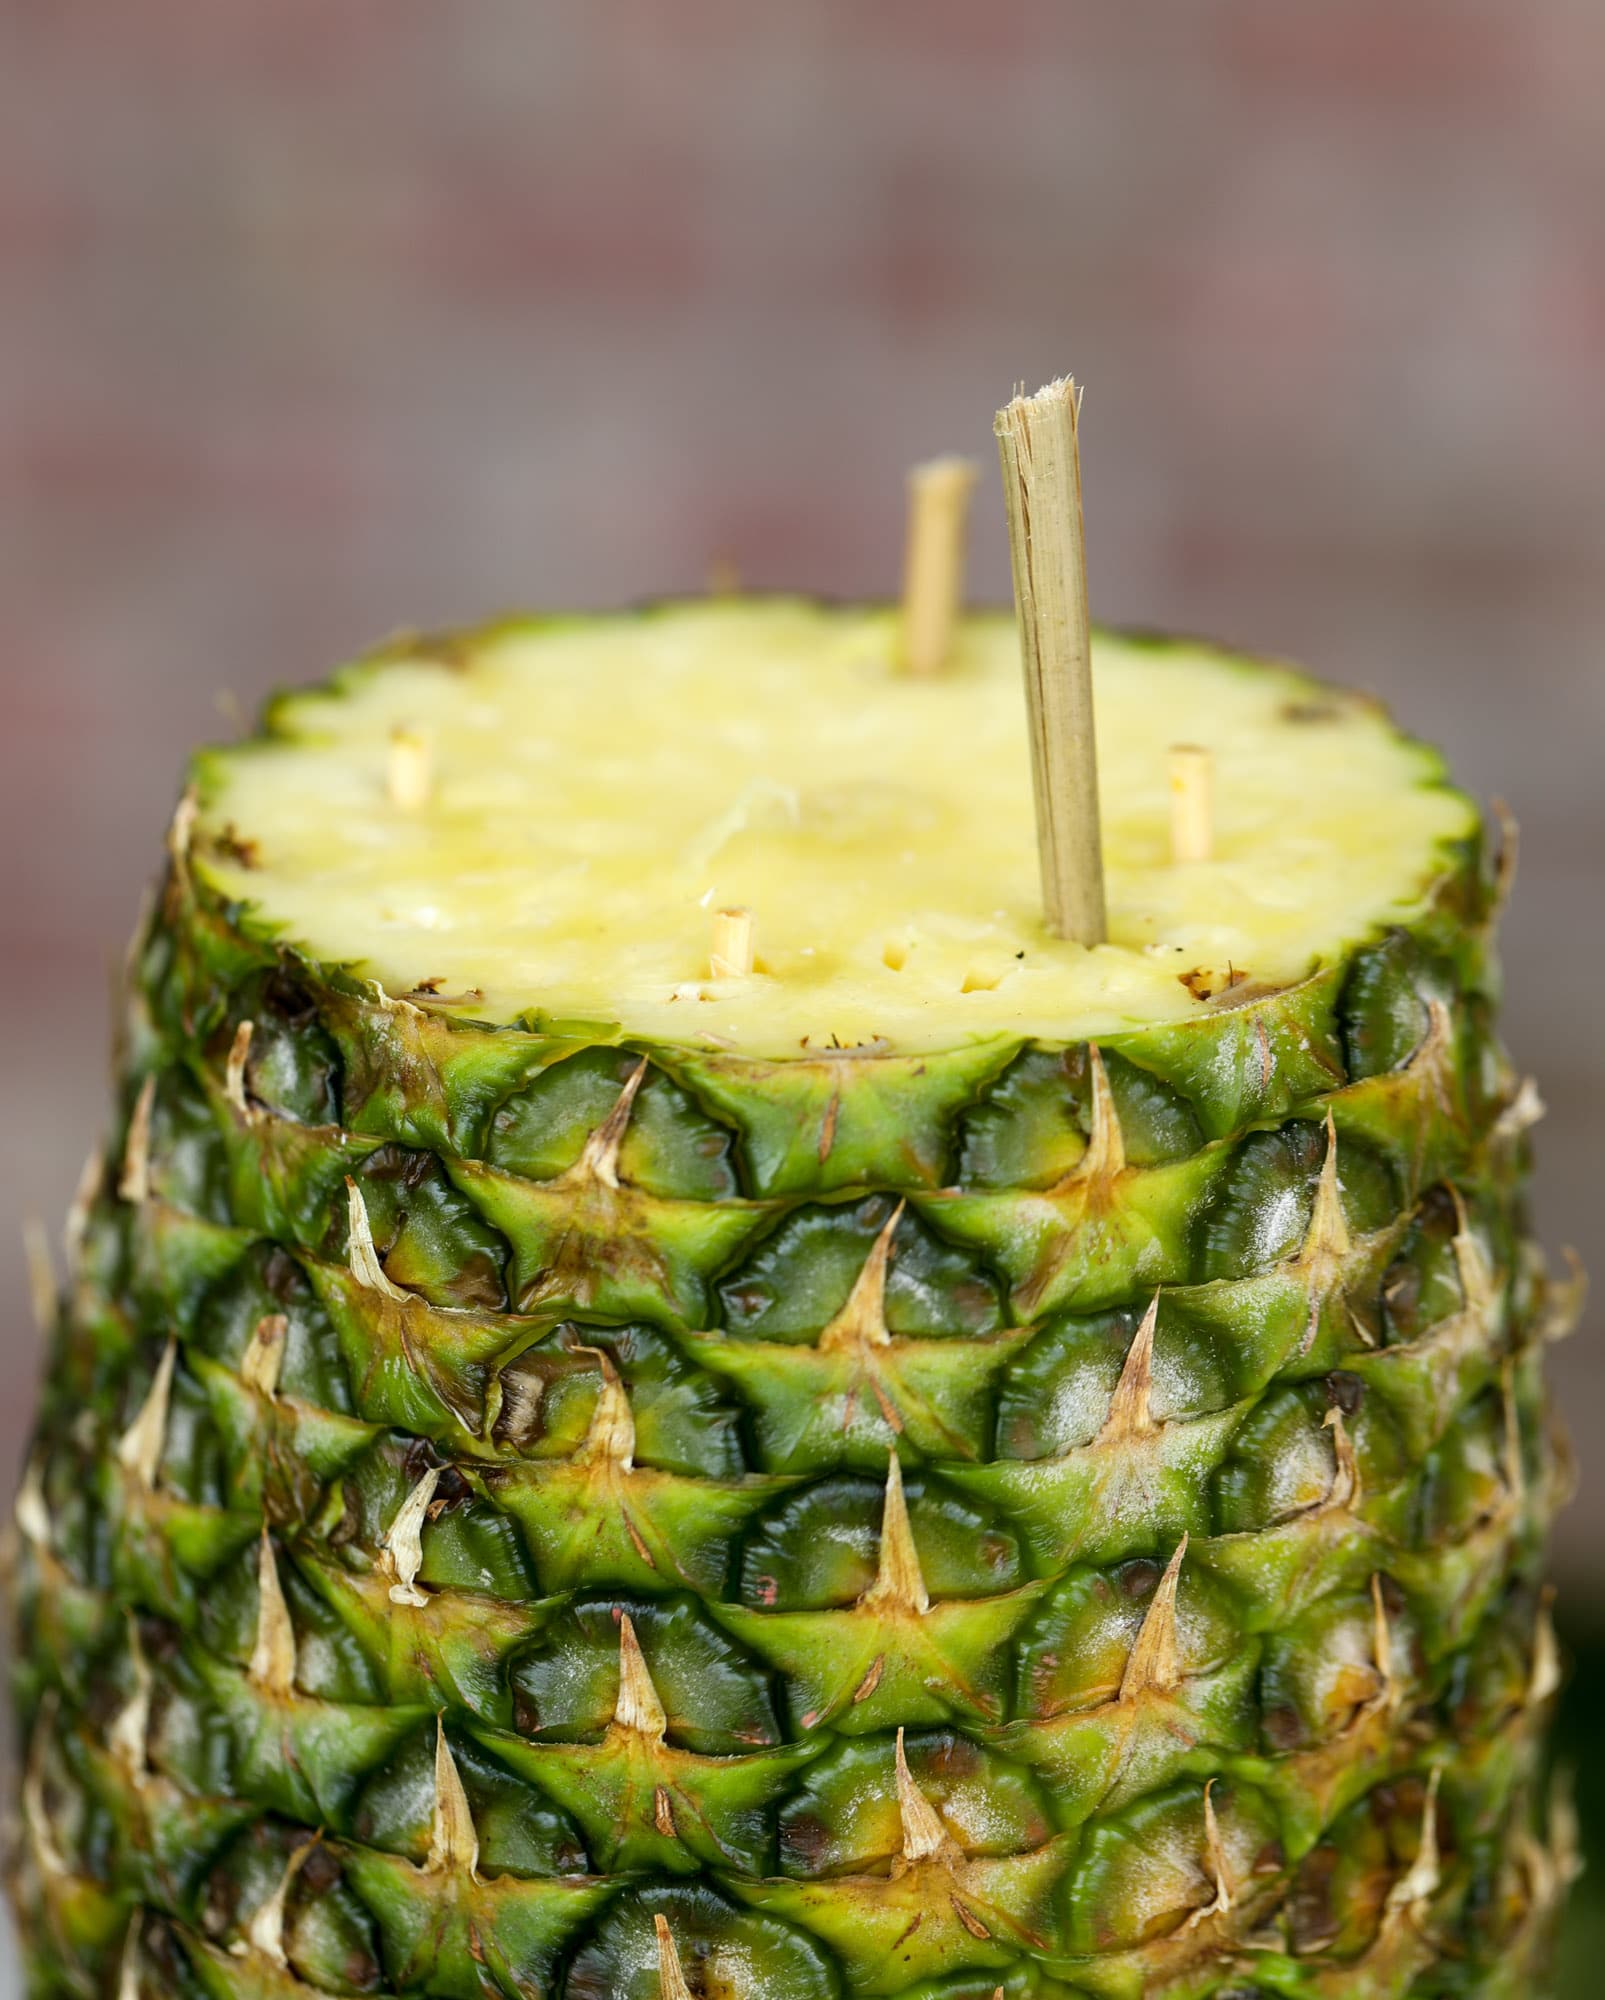 pineapple platter ideas